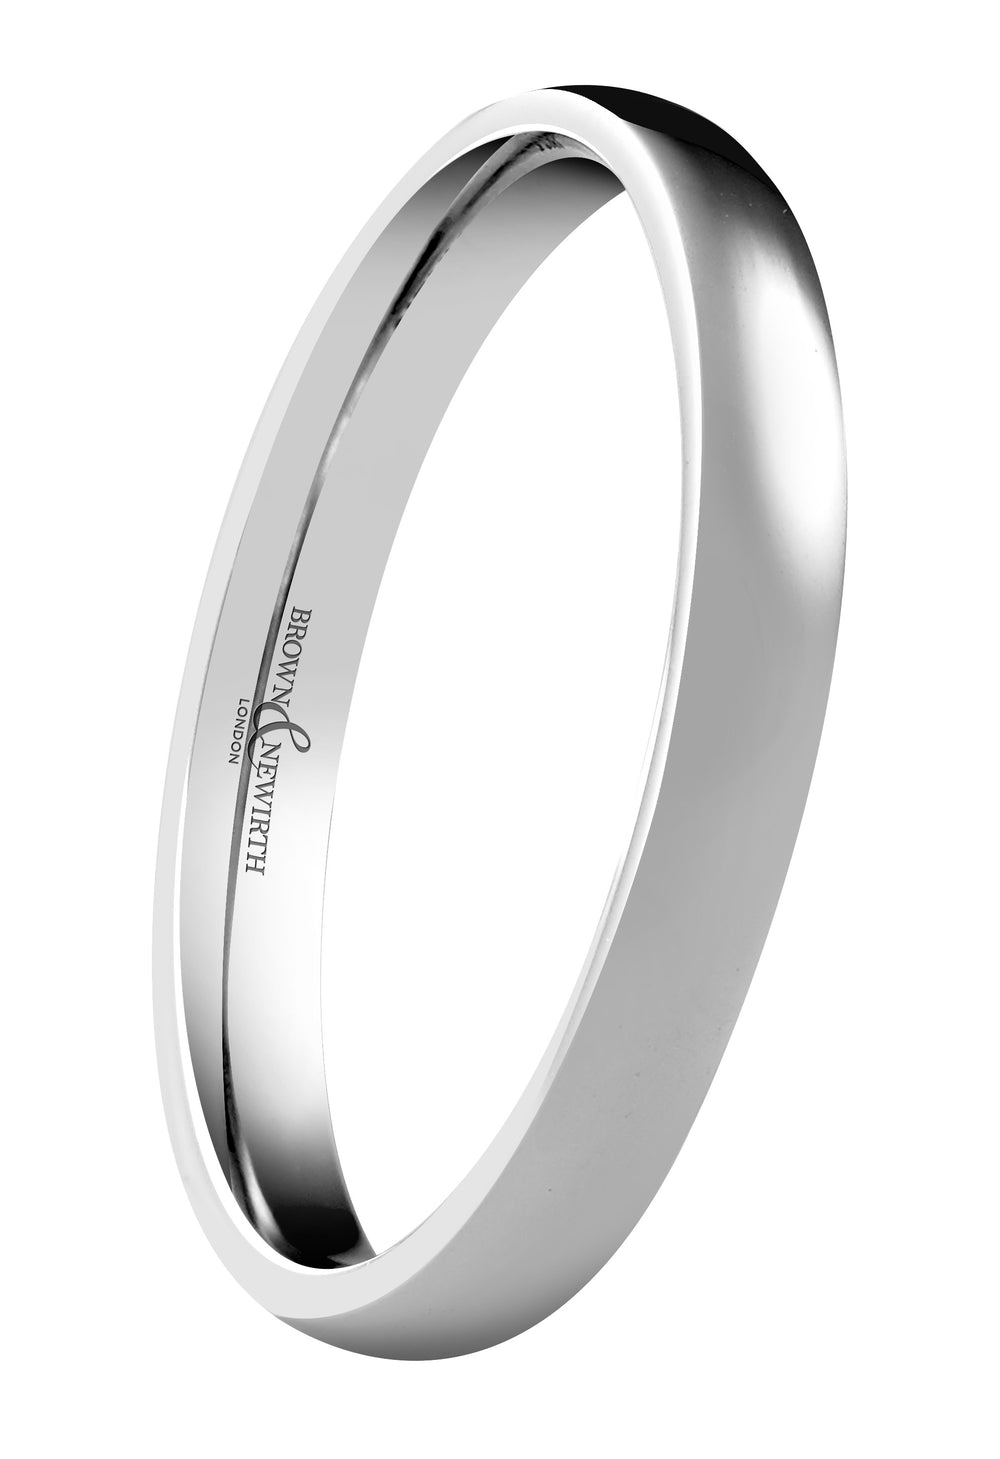 B&N Simplicity Wedding Ring 7mm